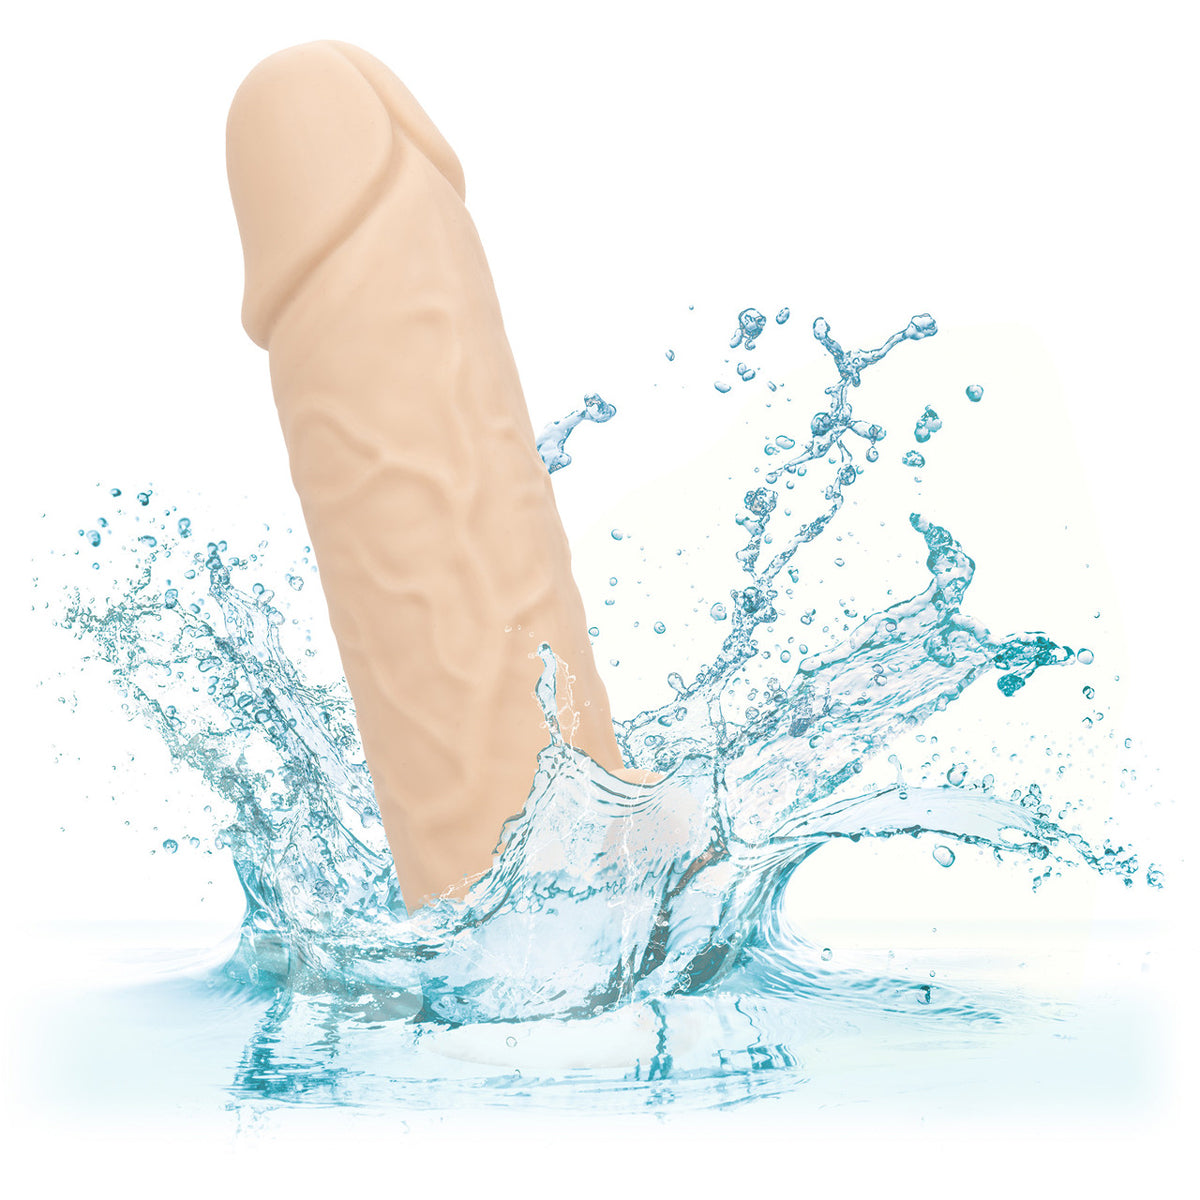 CalExotics® - Performance Maxx™ - Life-Like Penis Extension – 7” – Ivory